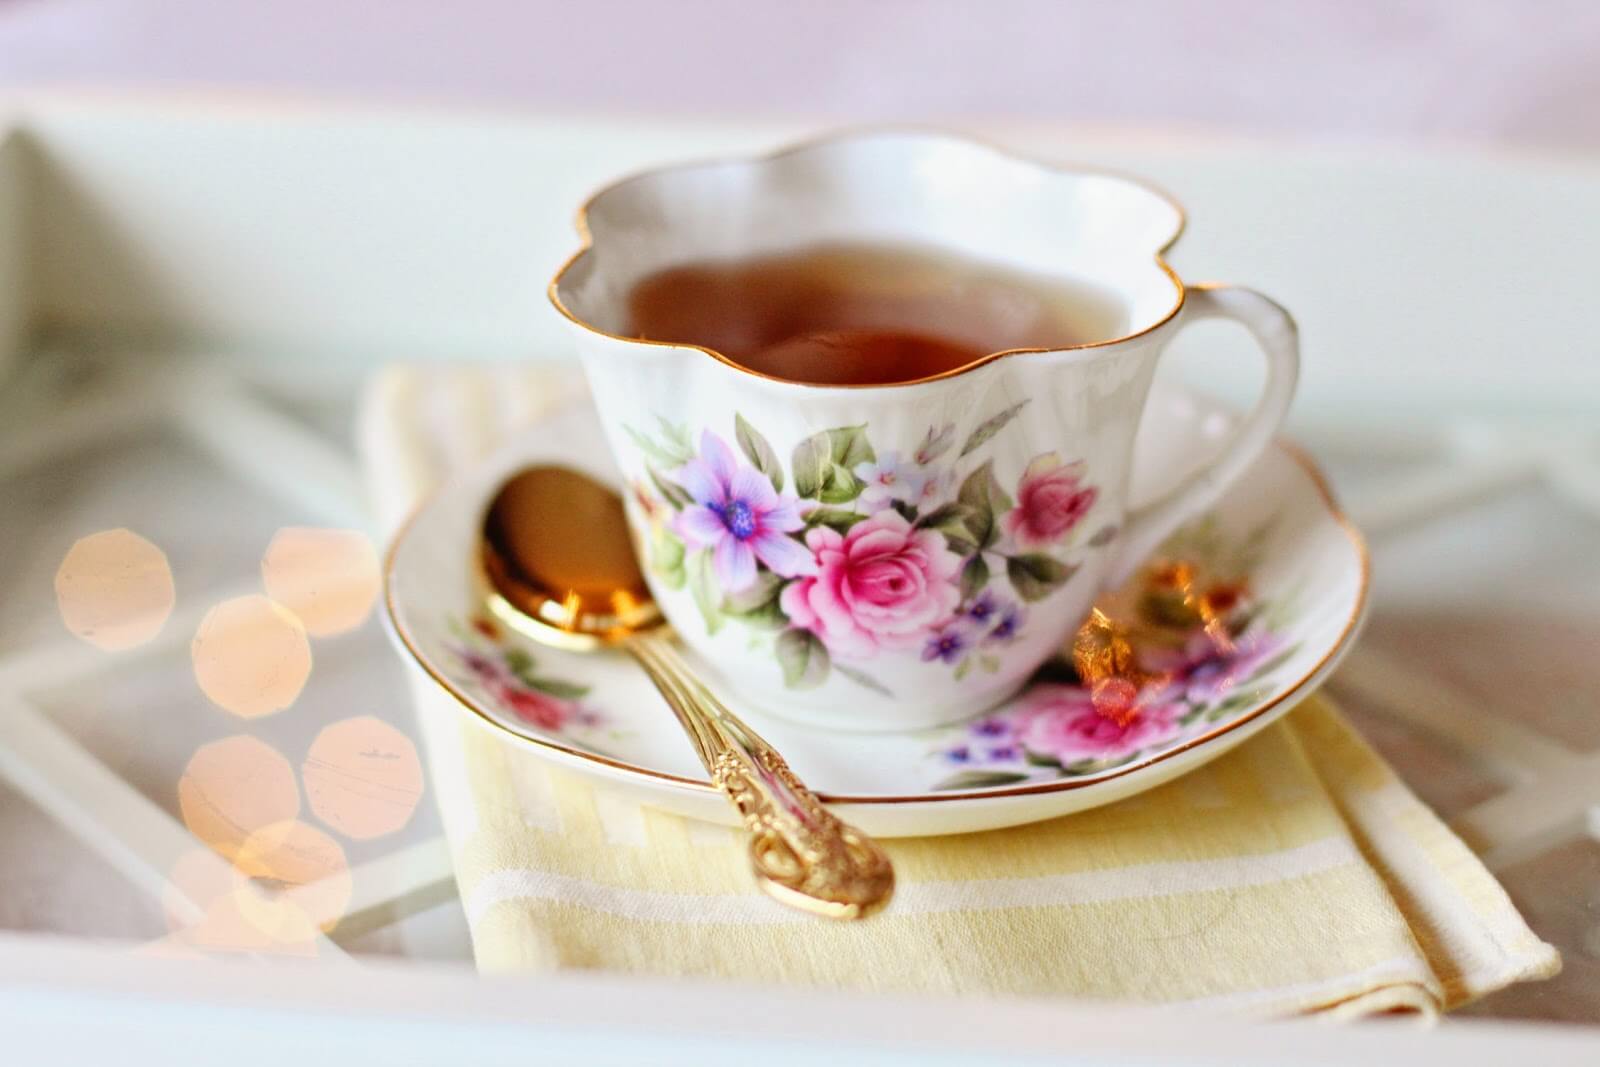 austin tea company: tea cup